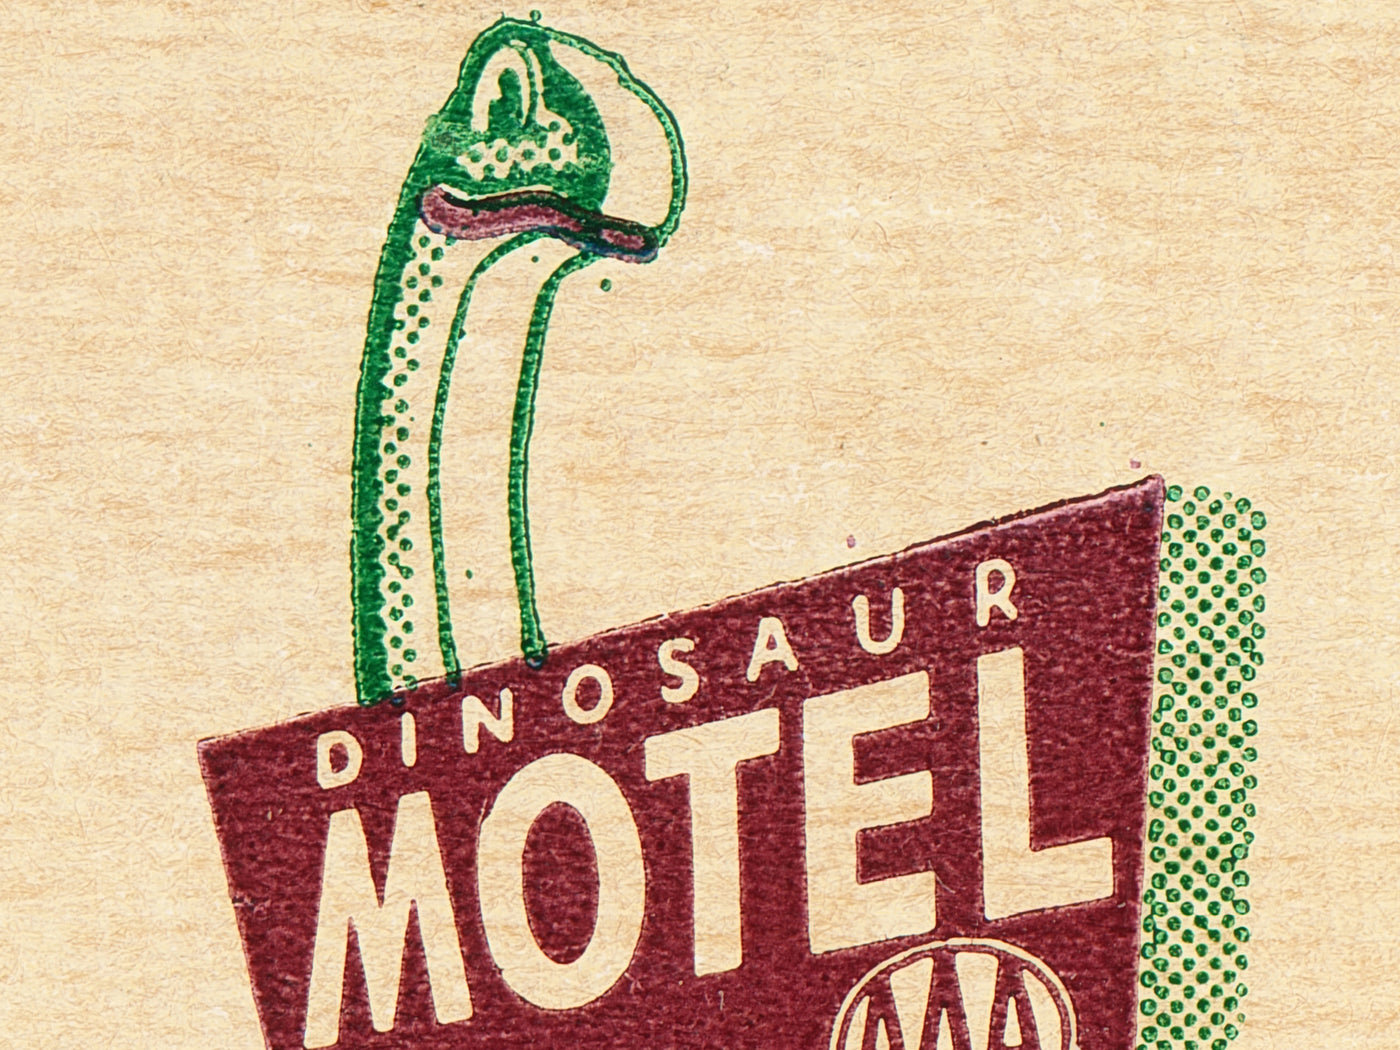 Dinosaur Motel Matchbook Print